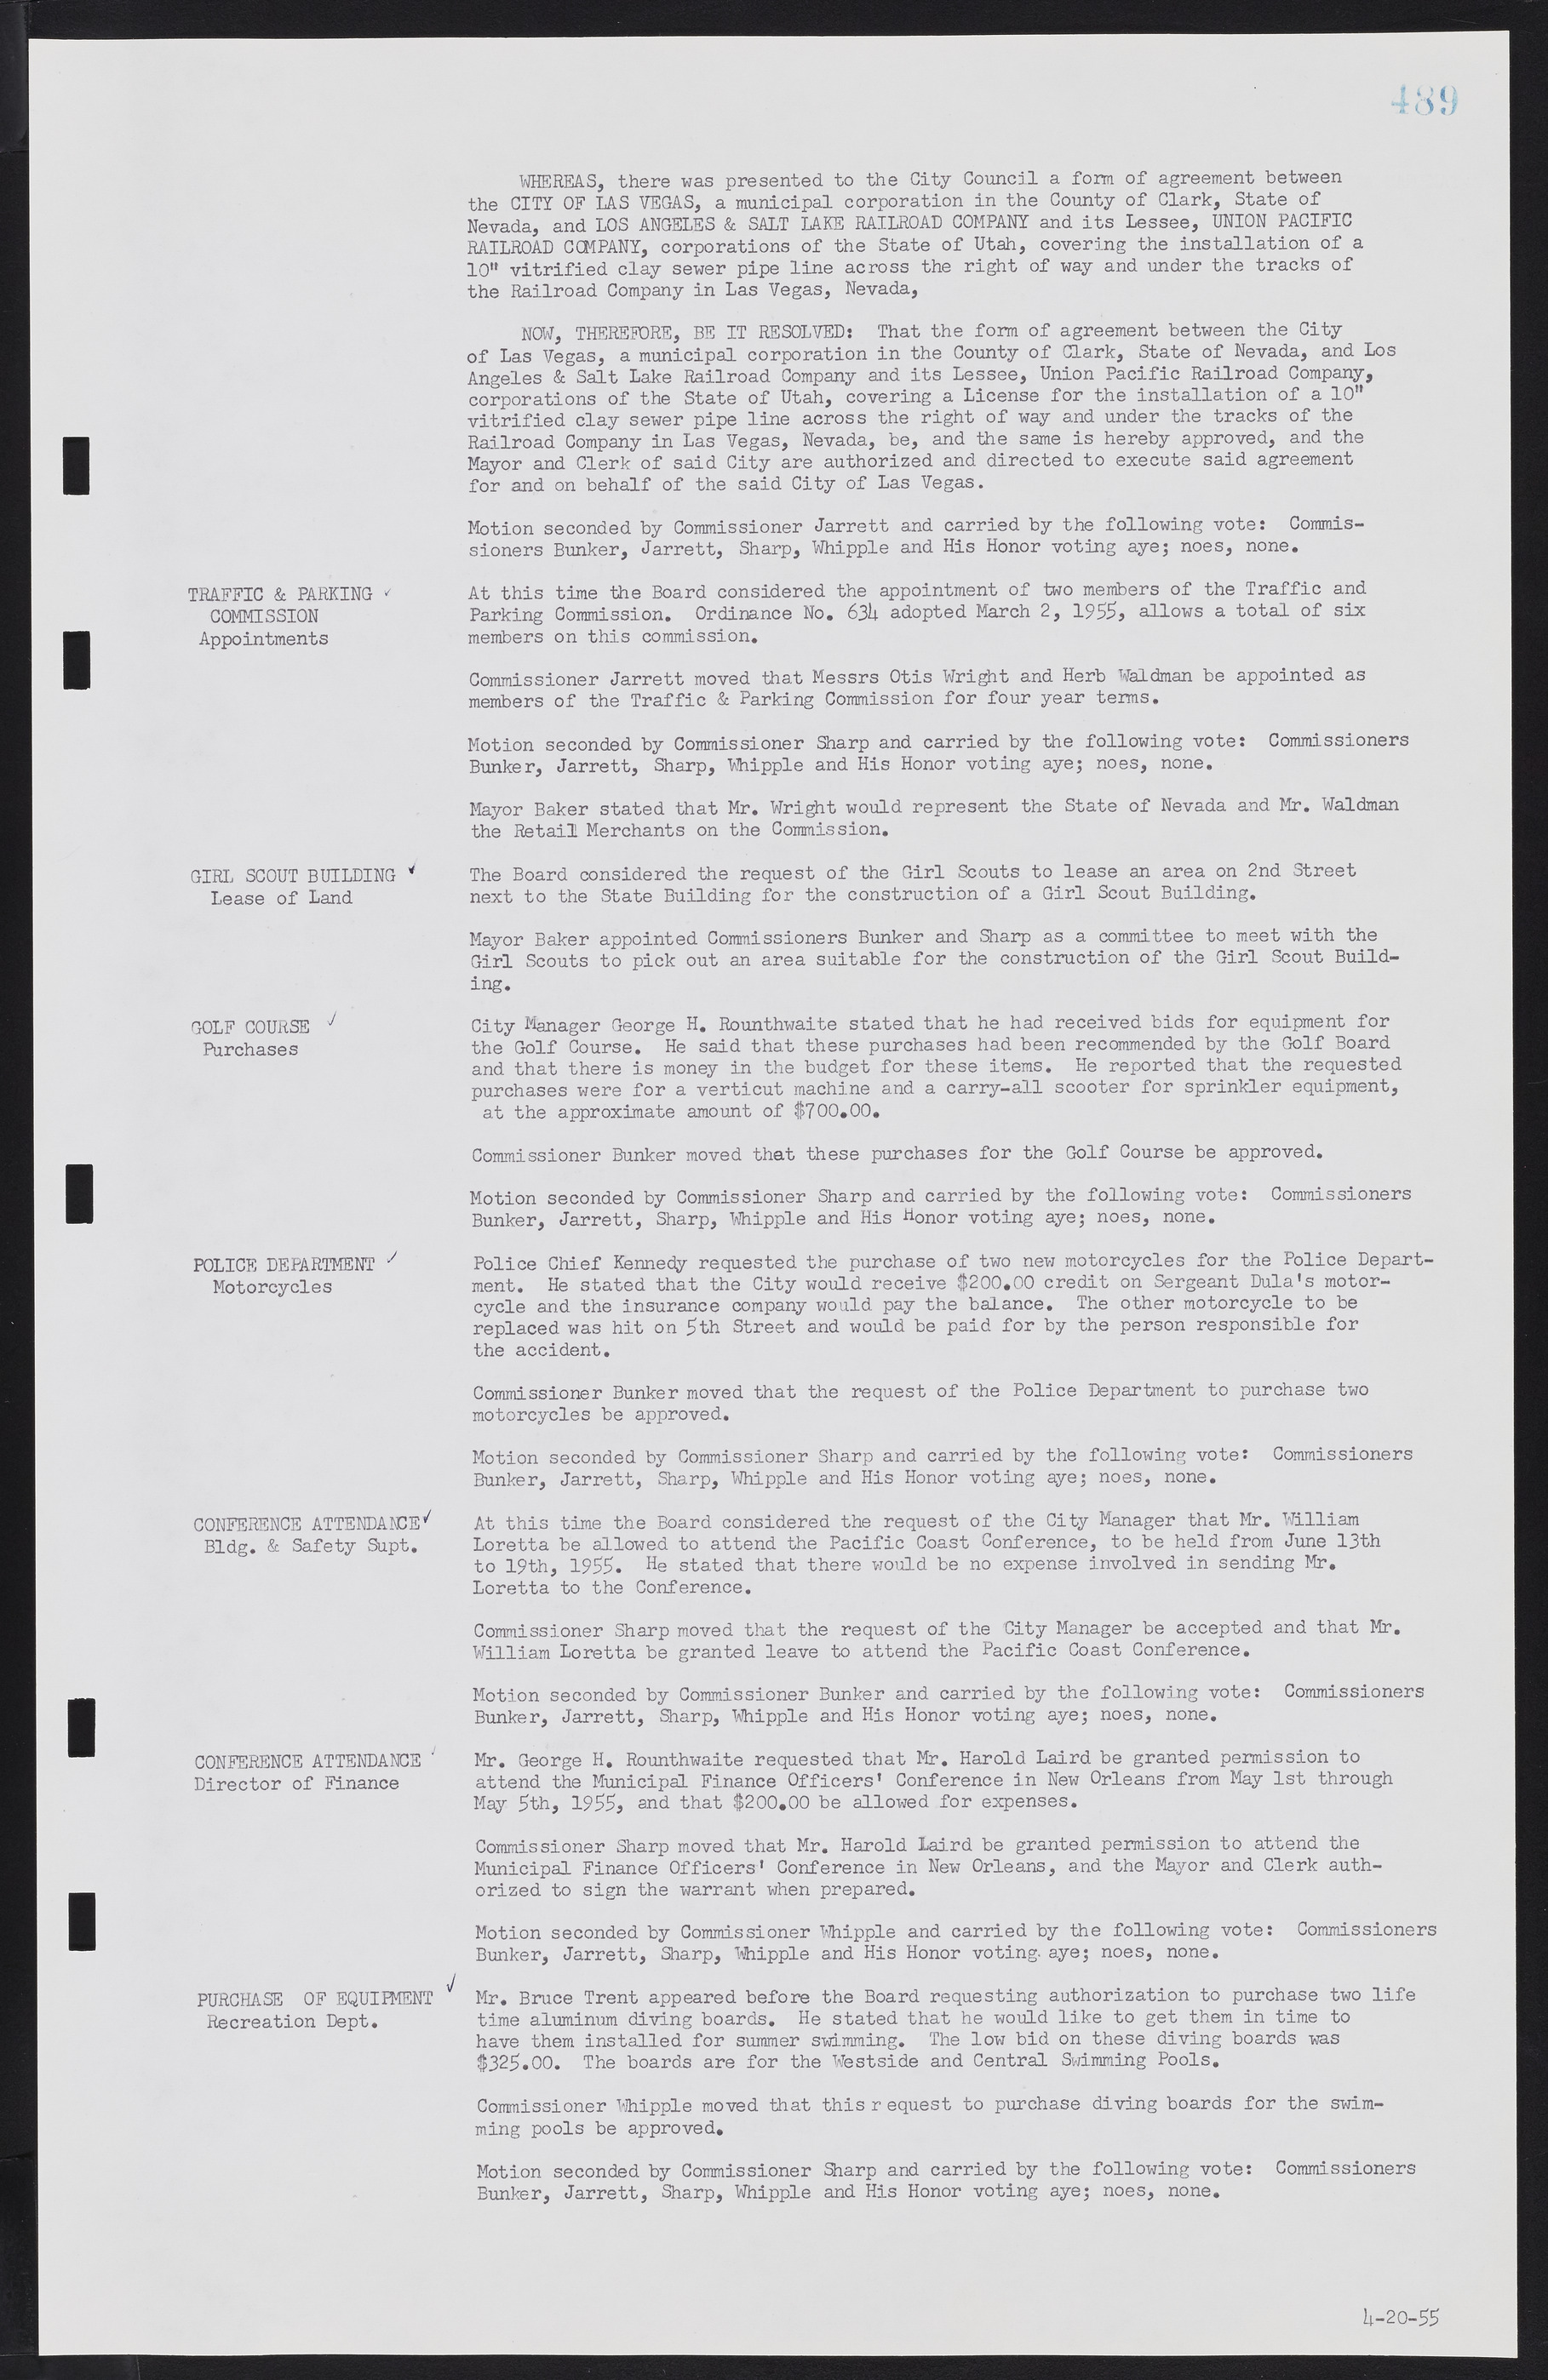 Las Vegas City Commission Minutes, February 17, 1954 to September 21, 1955, lvc000009-495